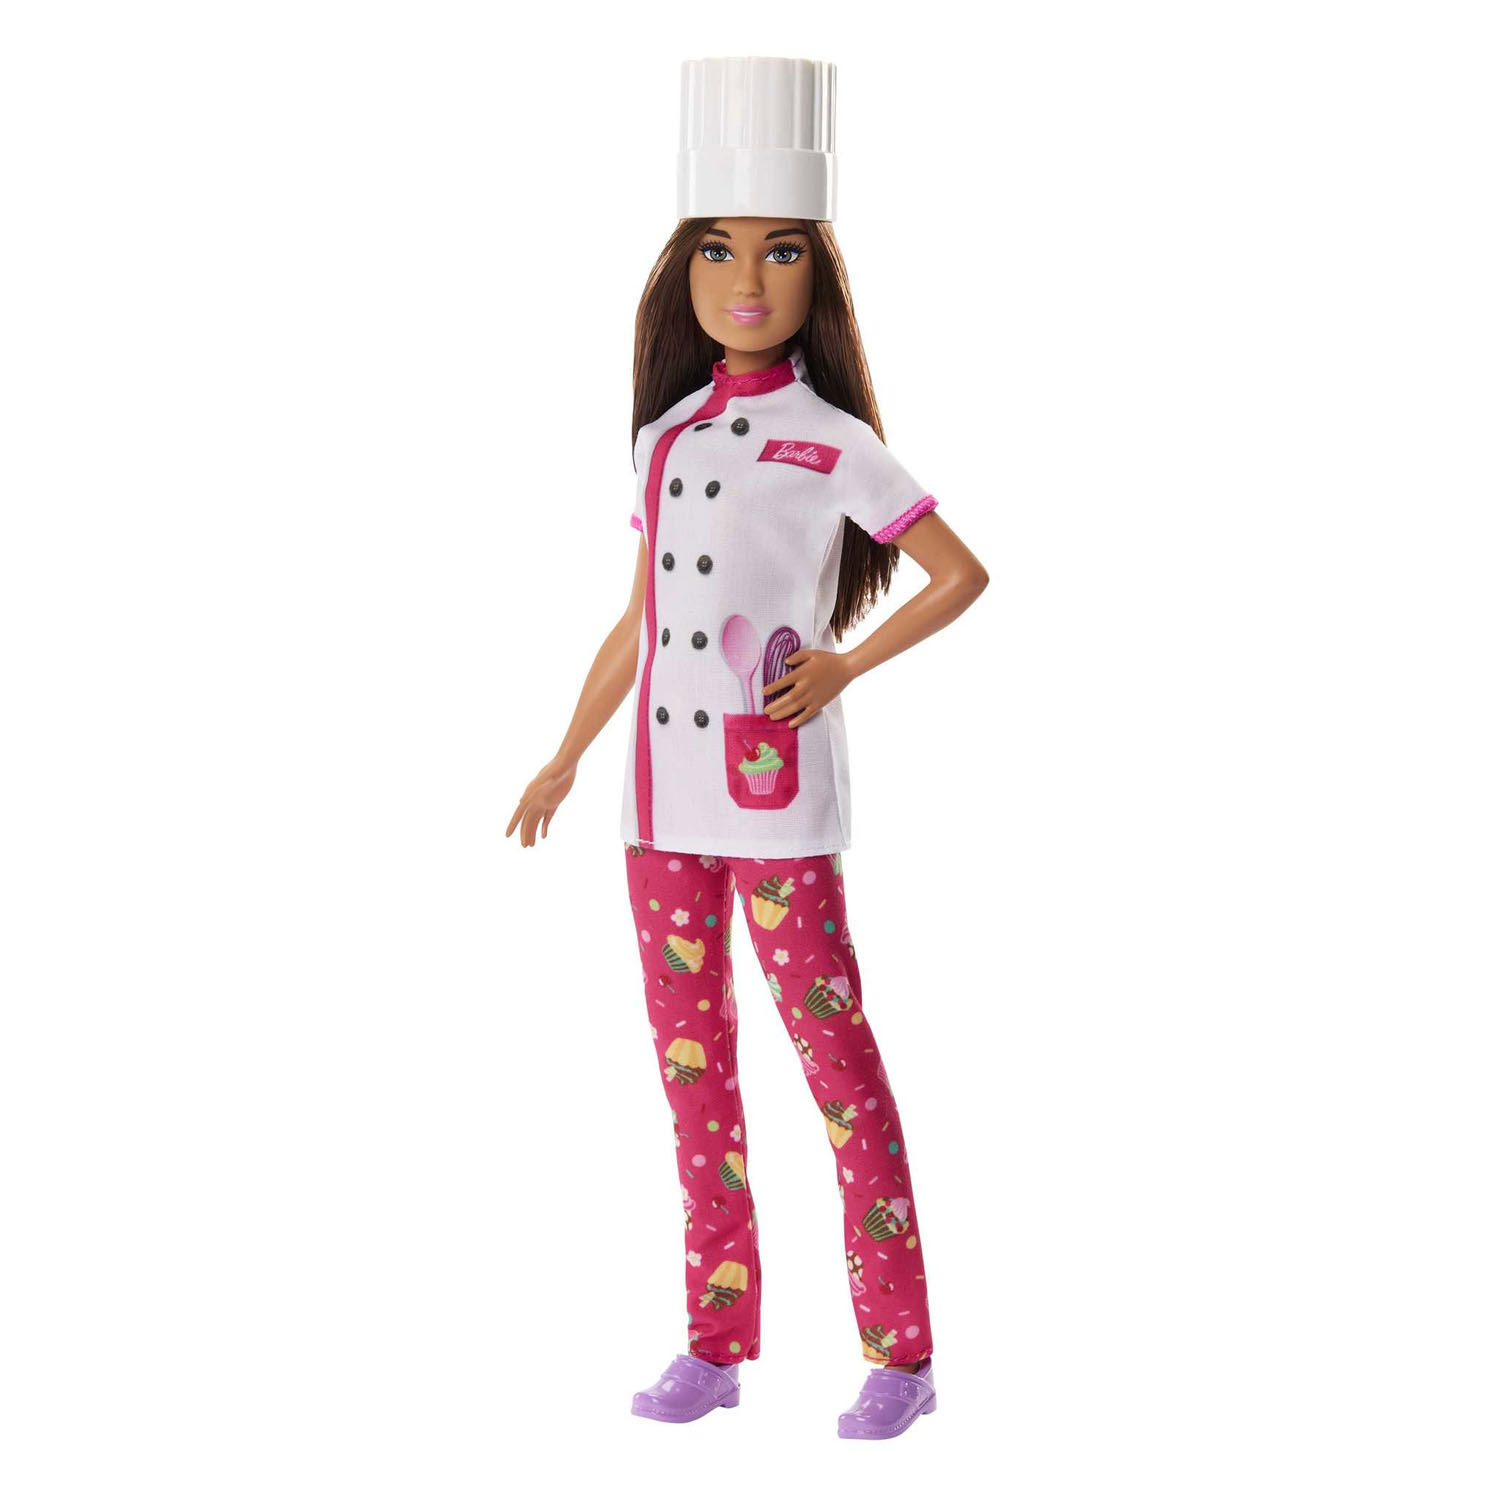 Barbie Chef Pattiserie Pop